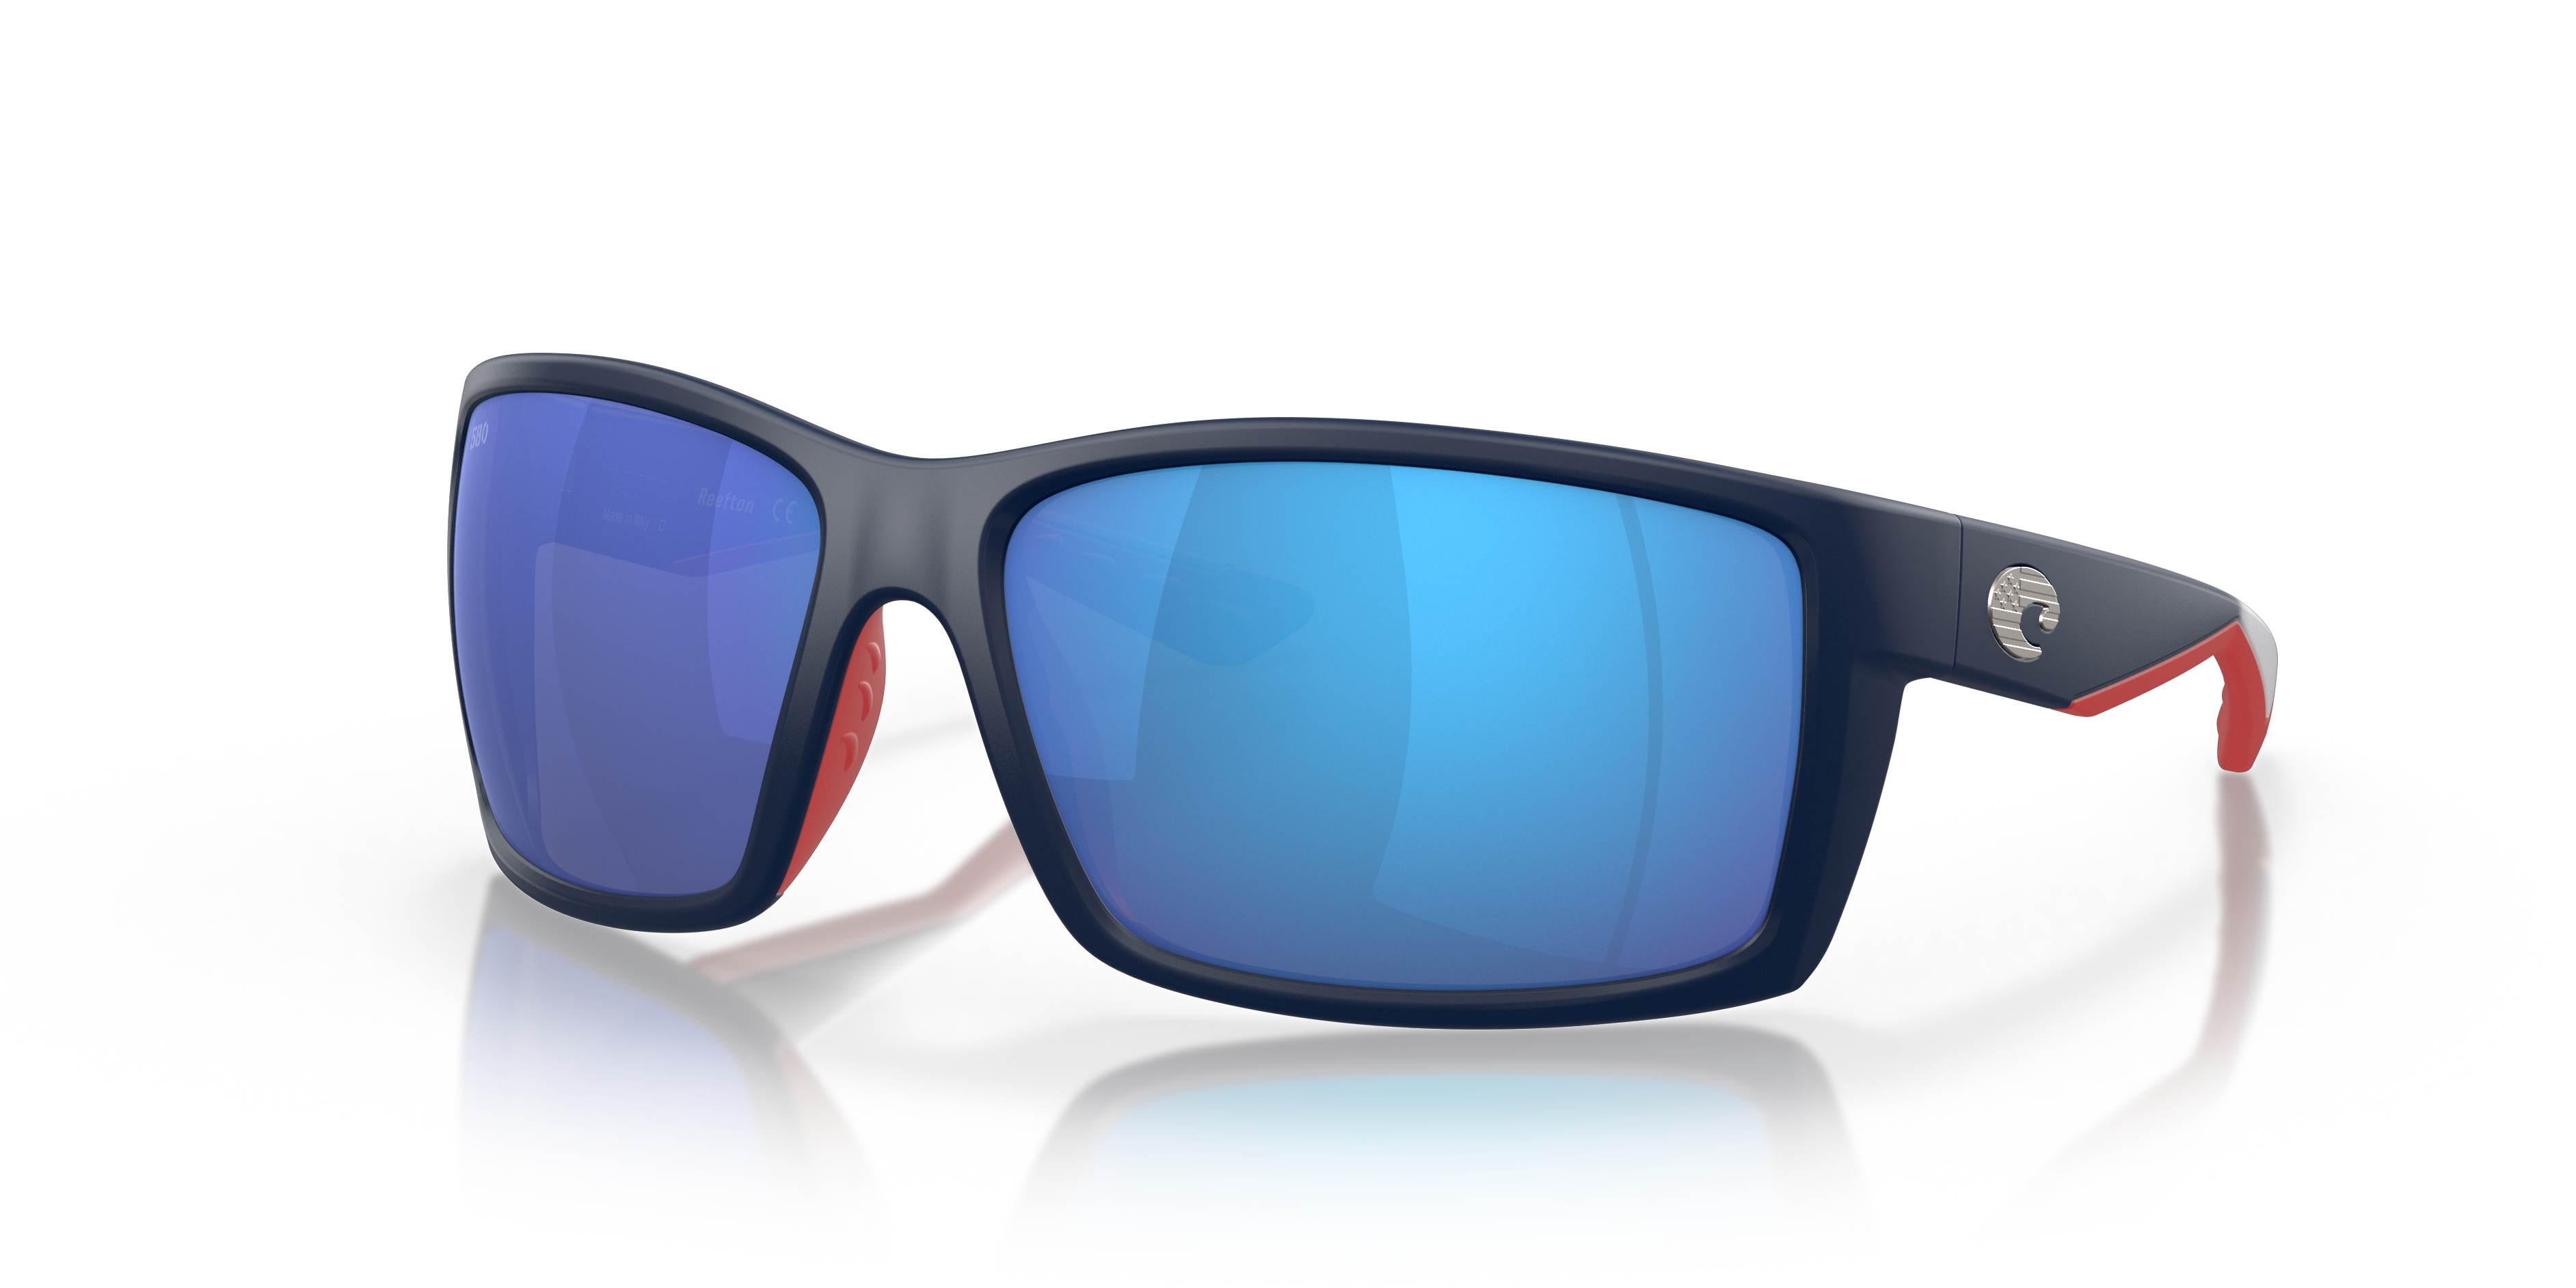 2 PAIR Men Polarized Sunglasses Wrap Driving Outdoor sport Glasses Blue Gray e 